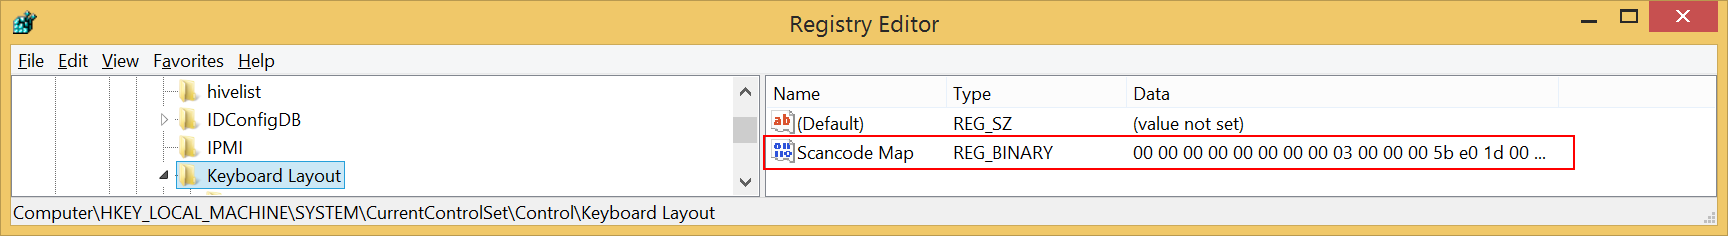 Registry entry for ScancodeMap